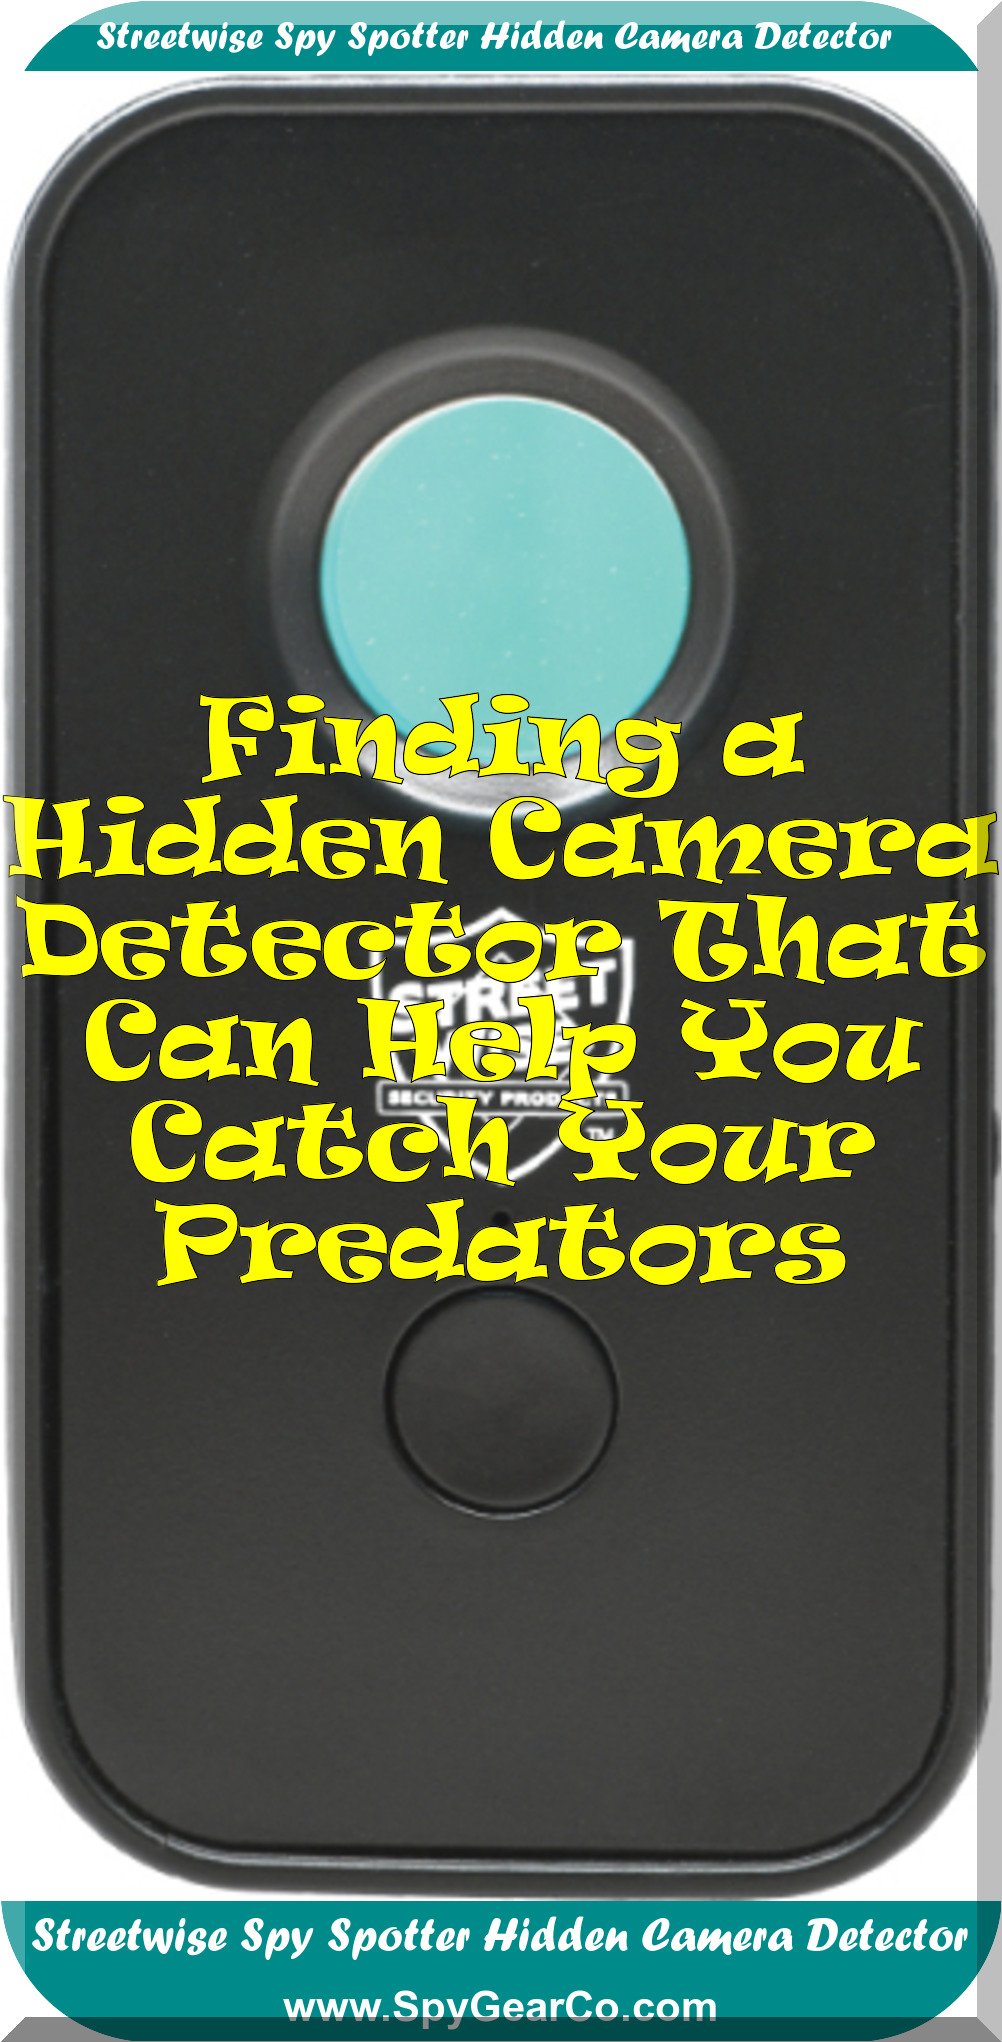 Streetwise Spy Spotter Hidden Camera Detector